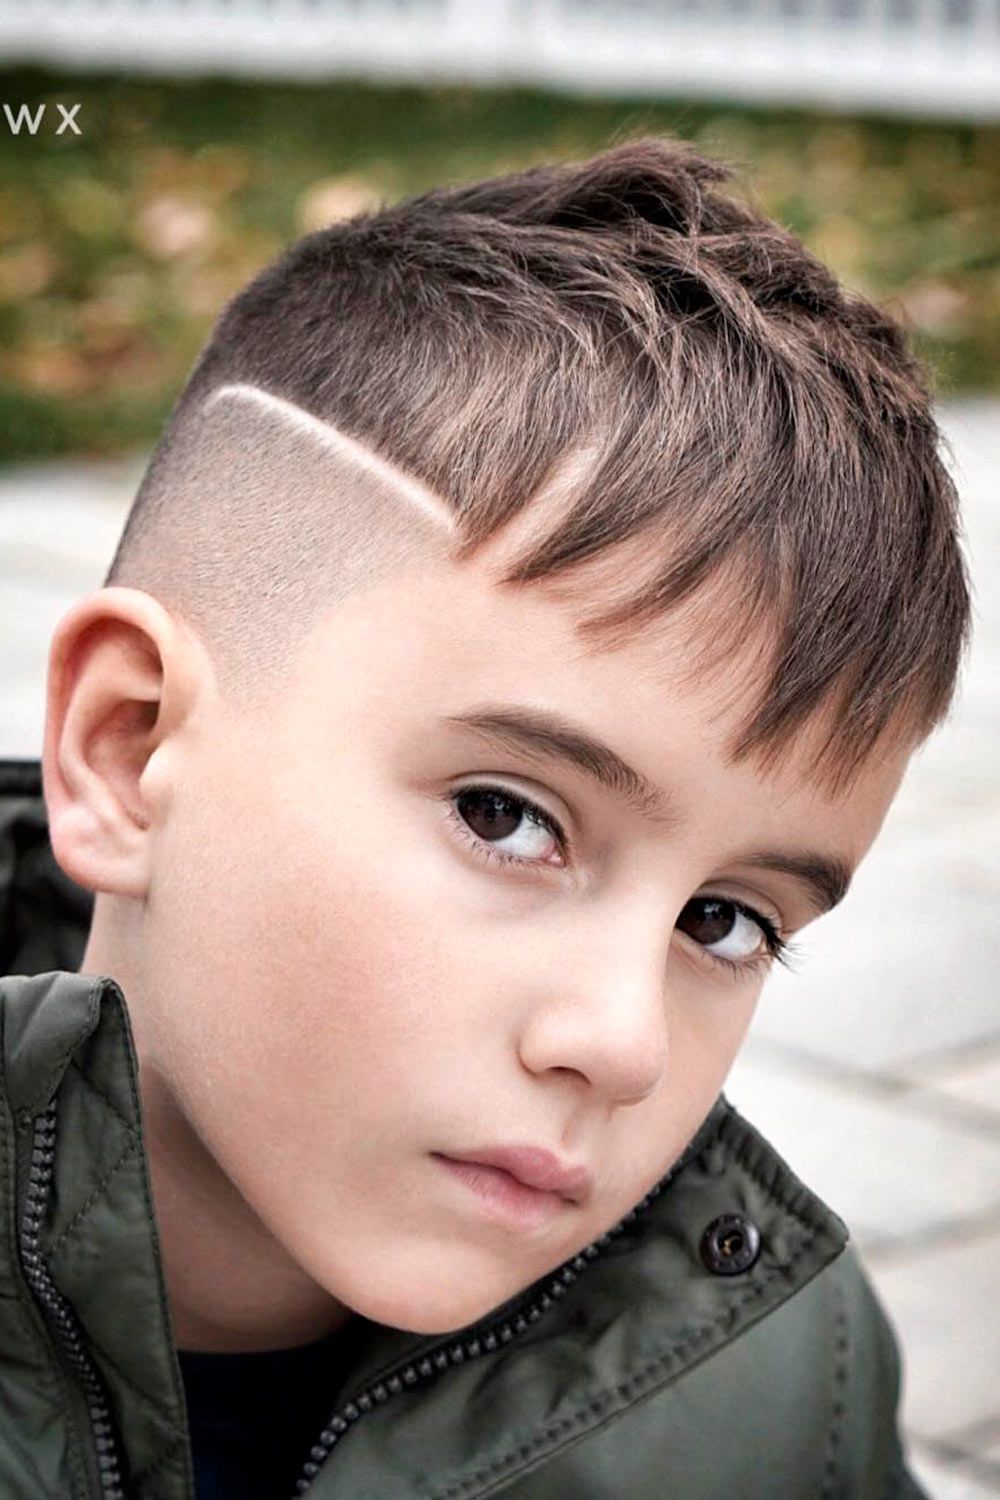 Medium Haircuts With Bangs, kids short haircuts, stylish boy haircuts, haircuts for boys, hair cuts for boys, boy hairstyles